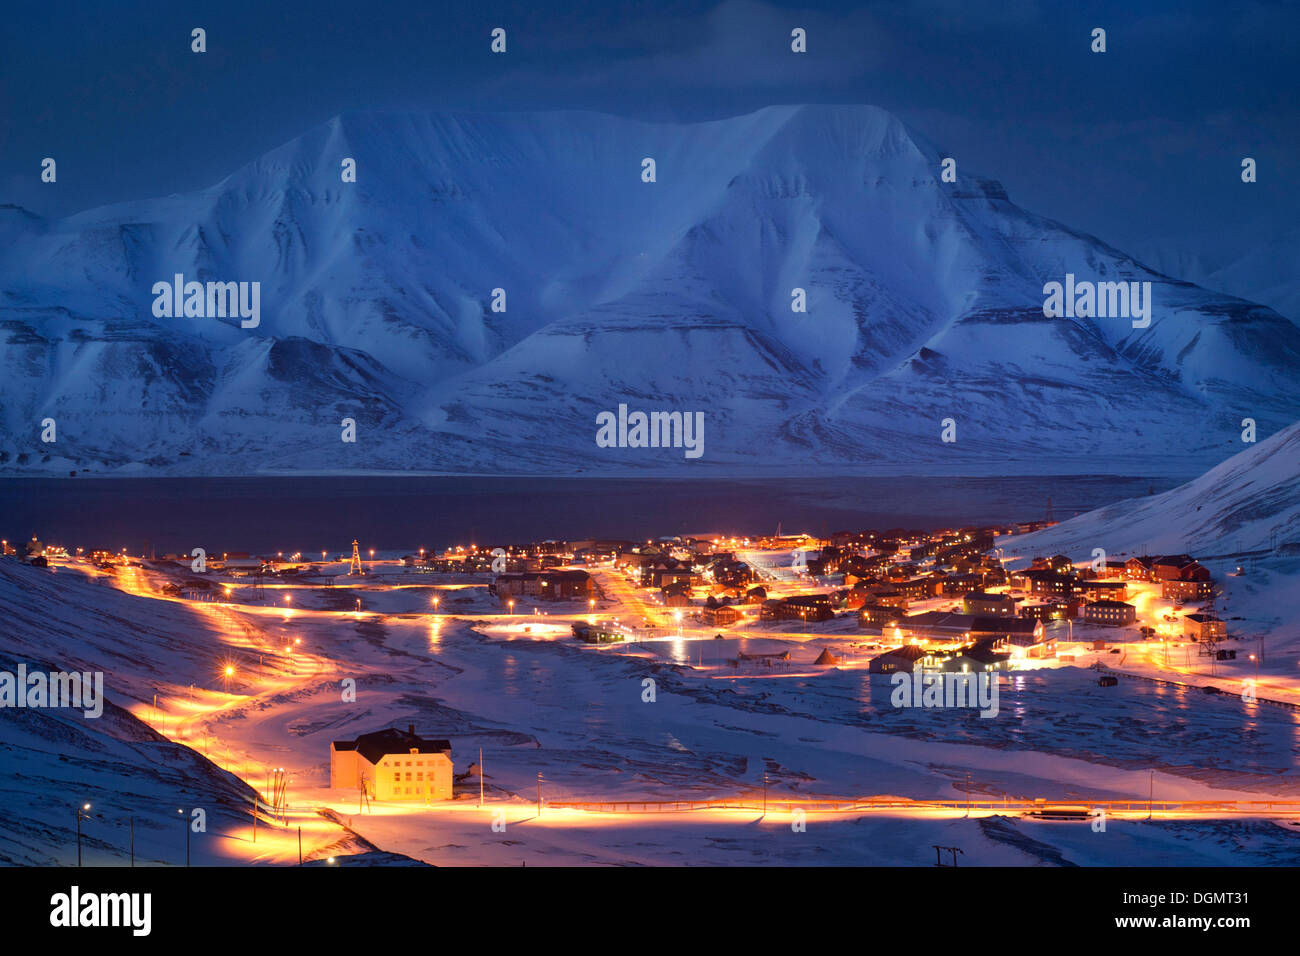 Polar night, the town of Longyearbyen at dusk, Spitsbergen, Svalbard, Norway, Europe Stock Photo